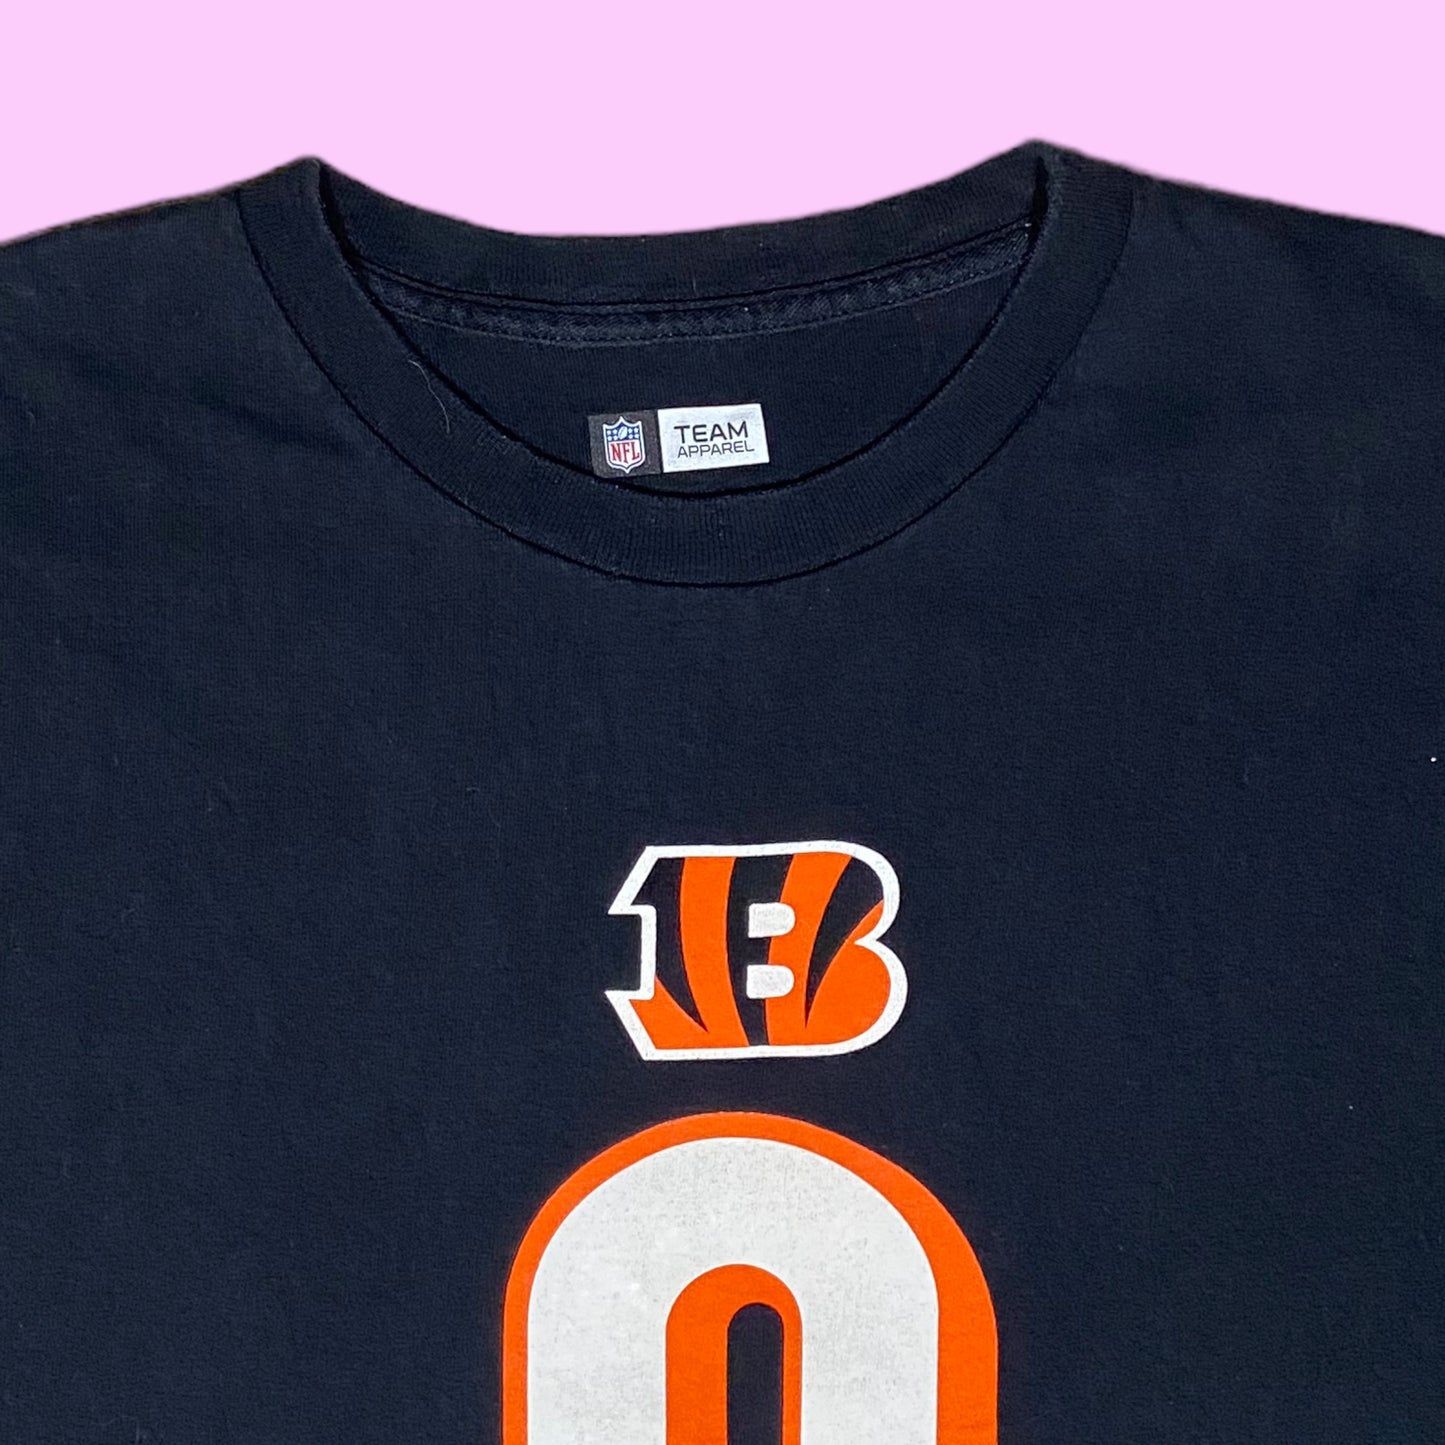 Bengals Burrow t-shirt - XL